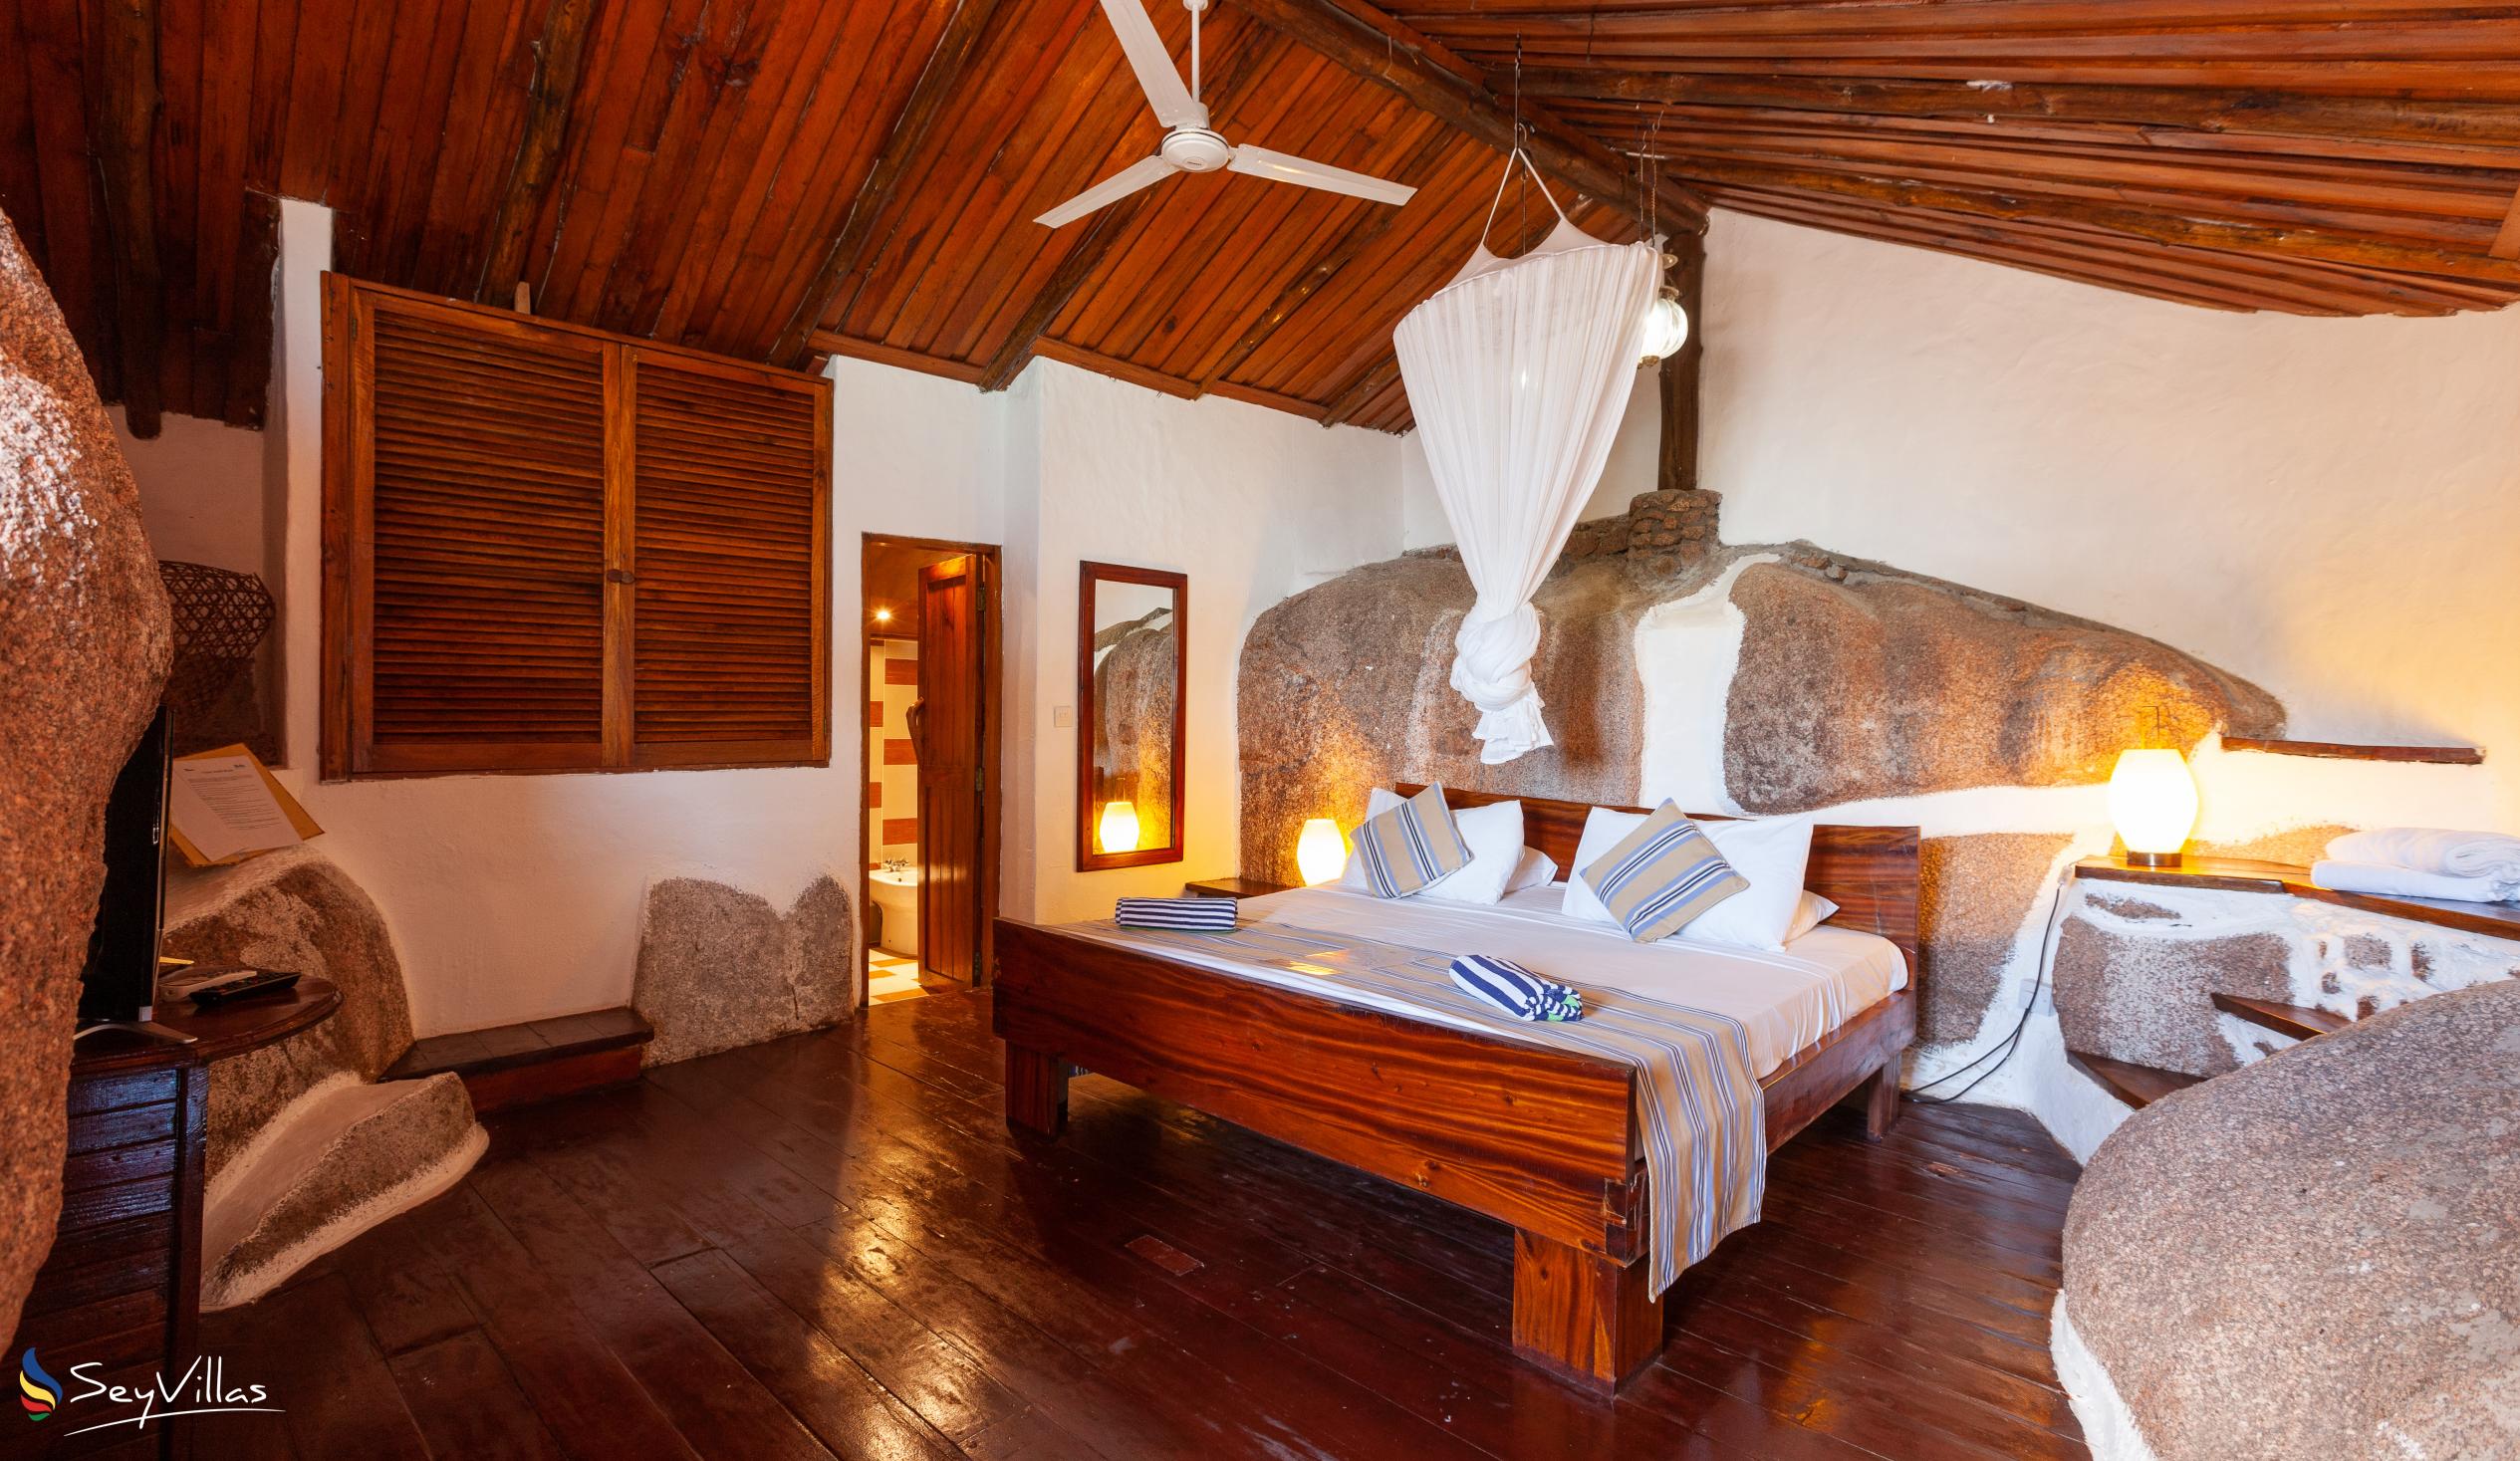 Photo 57: Chauve Souris Relais - Castaway Room - Praslin (Seychelles)